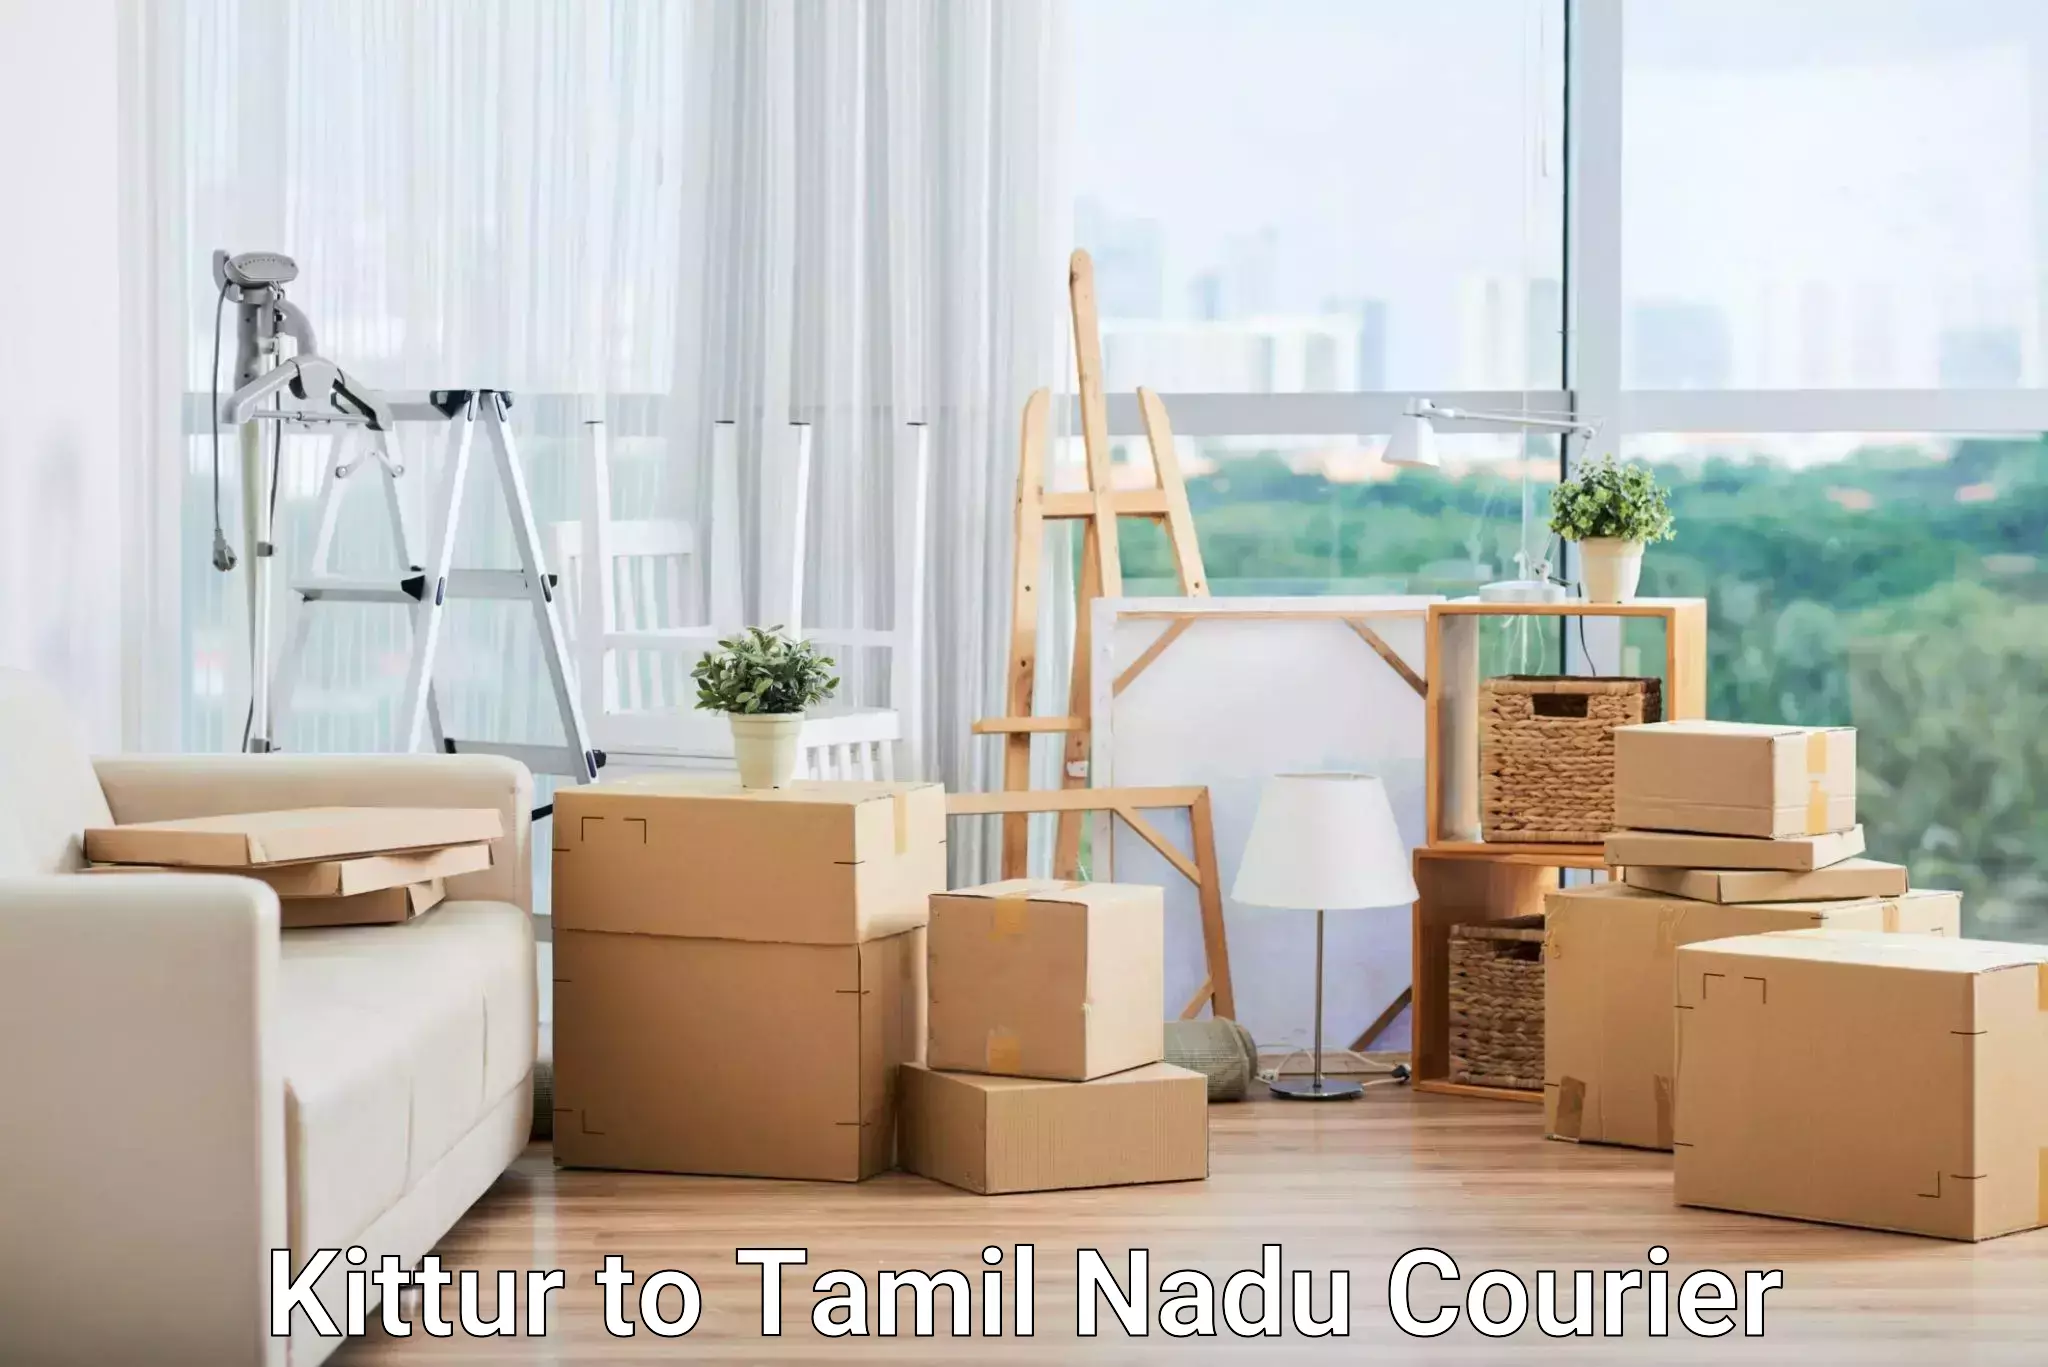 Package delivery network Kittur to Tamil Nadu